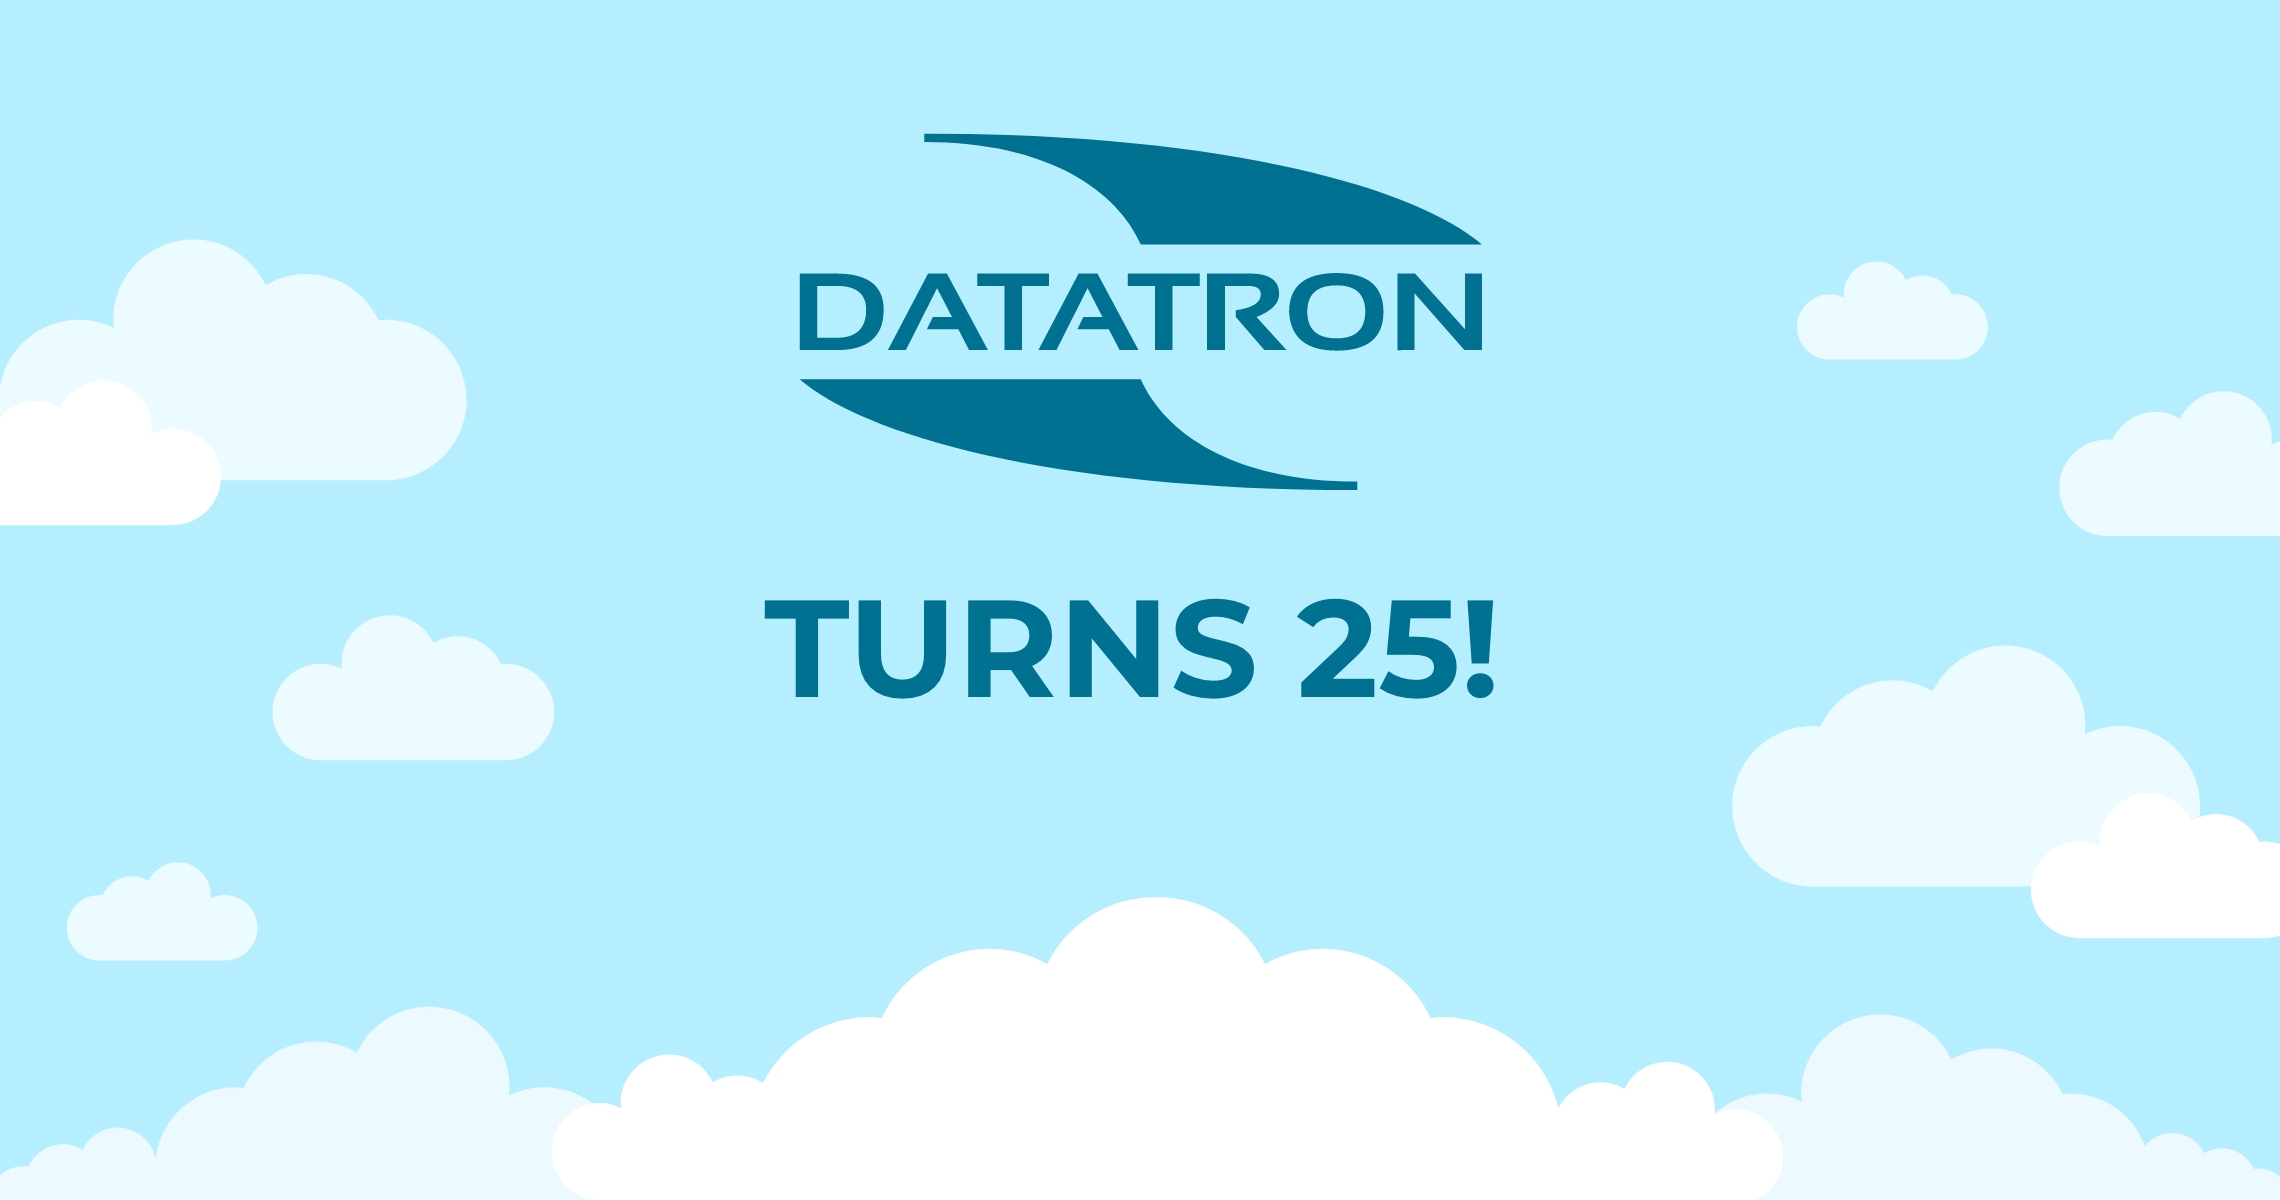 Datatron Turns 25